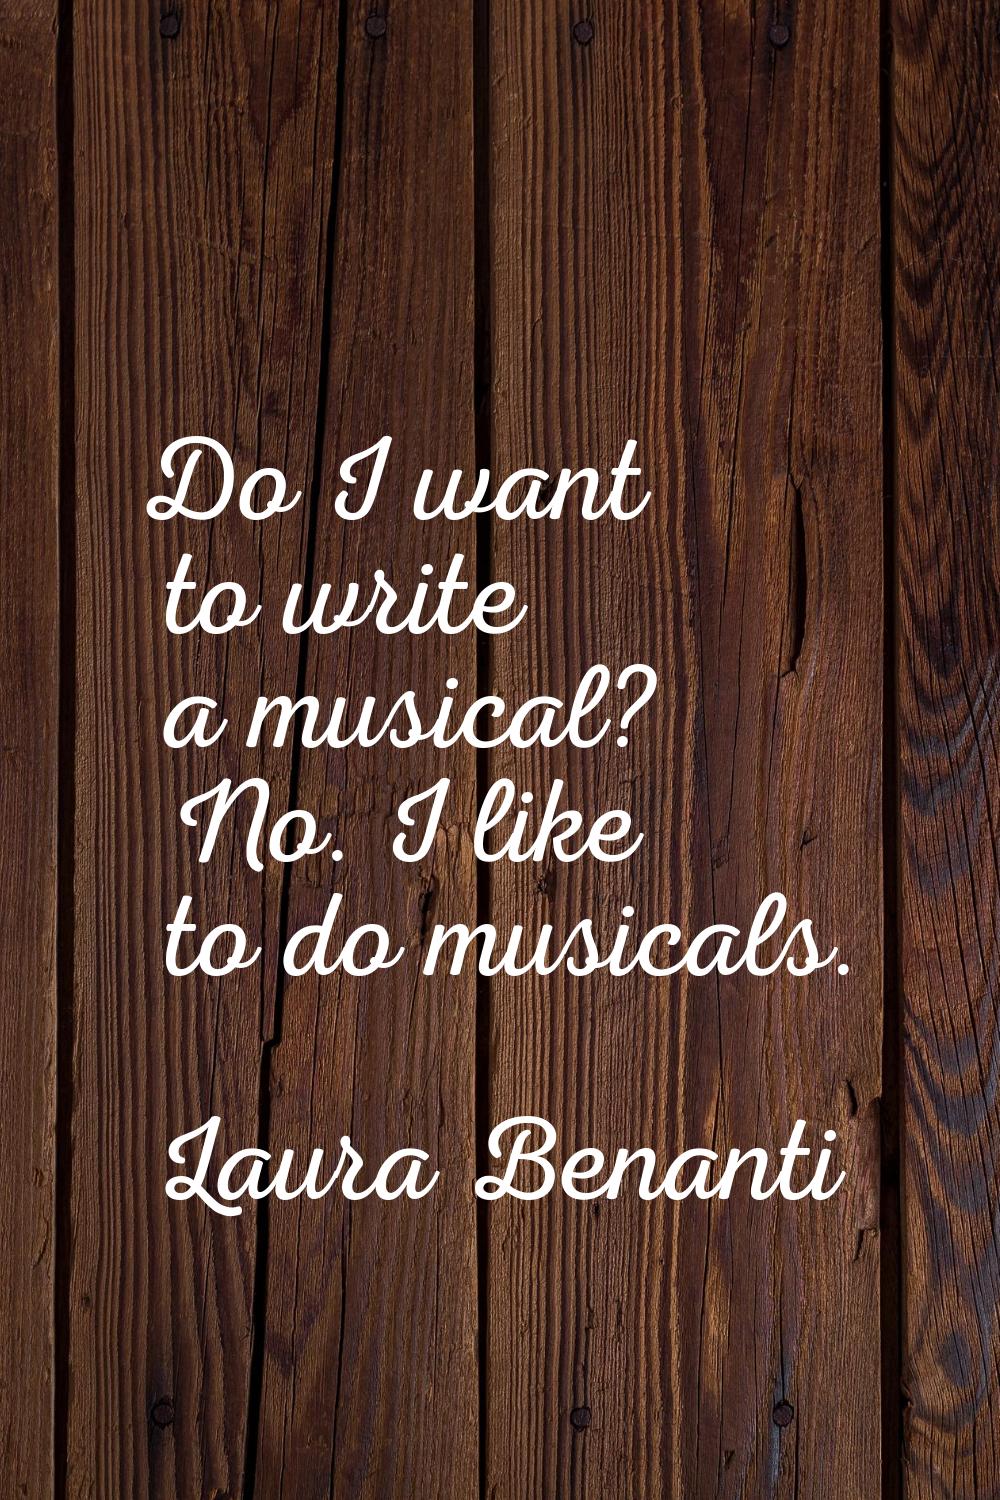 Do I want to write a musical? No. I like to do musicals.